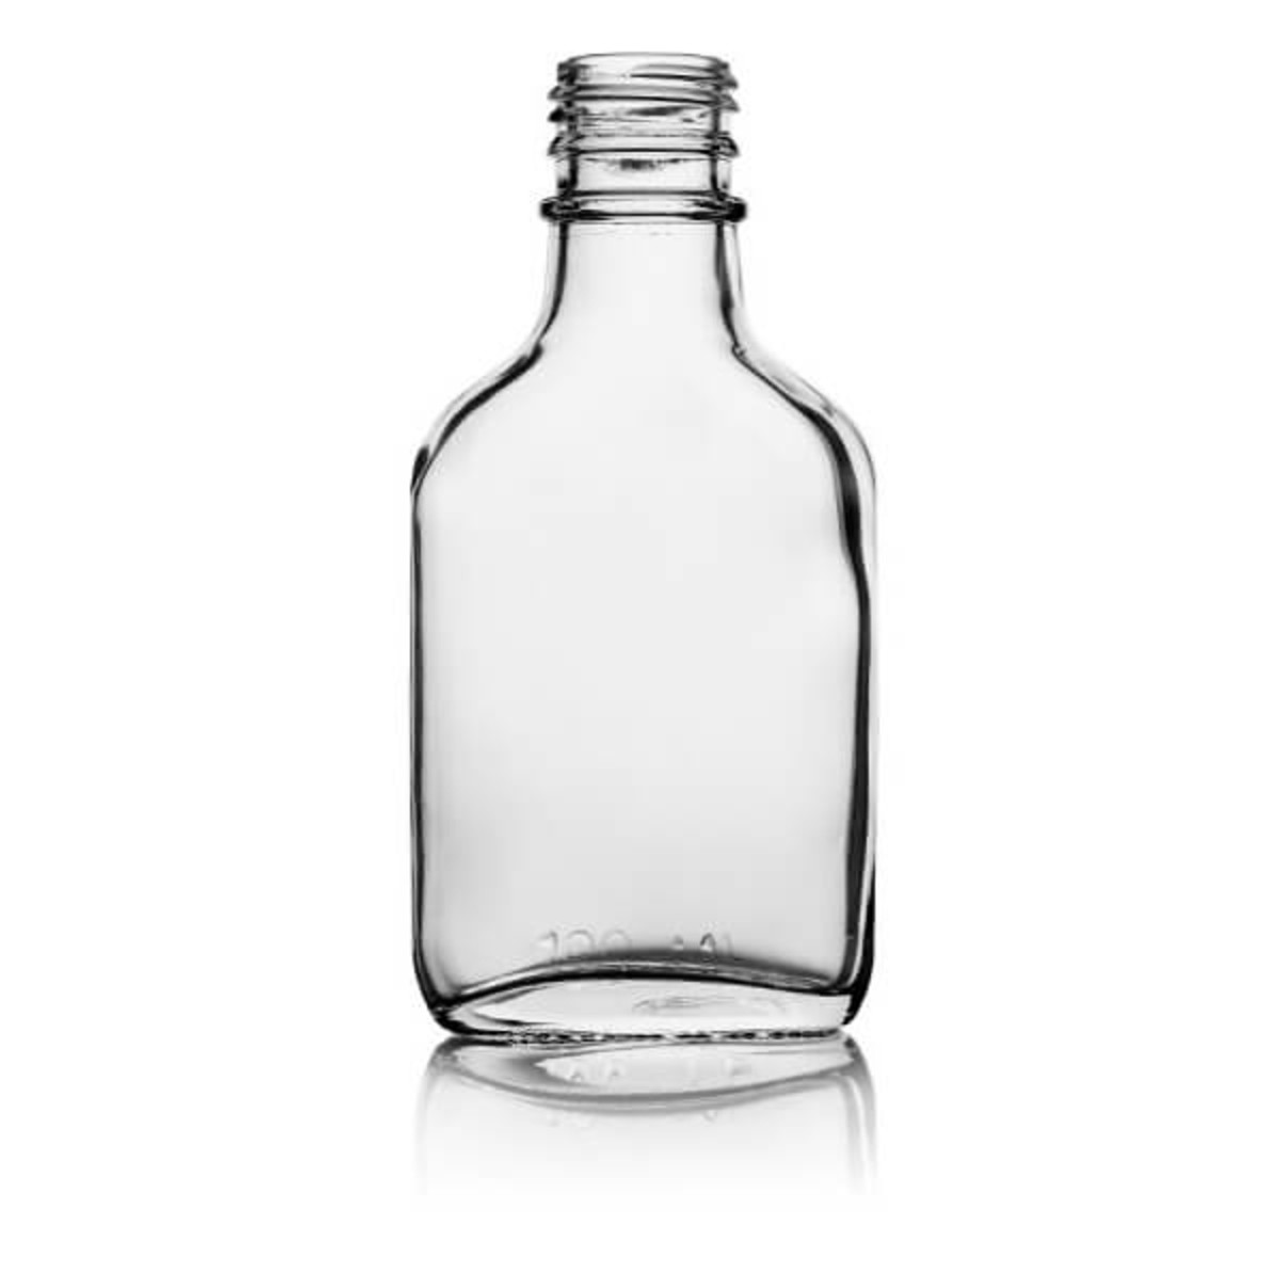 100ml Clear Glass Flask Bottles (Cap Not Included) - 12/Case, Clear Type III BPA Free 28-KERR